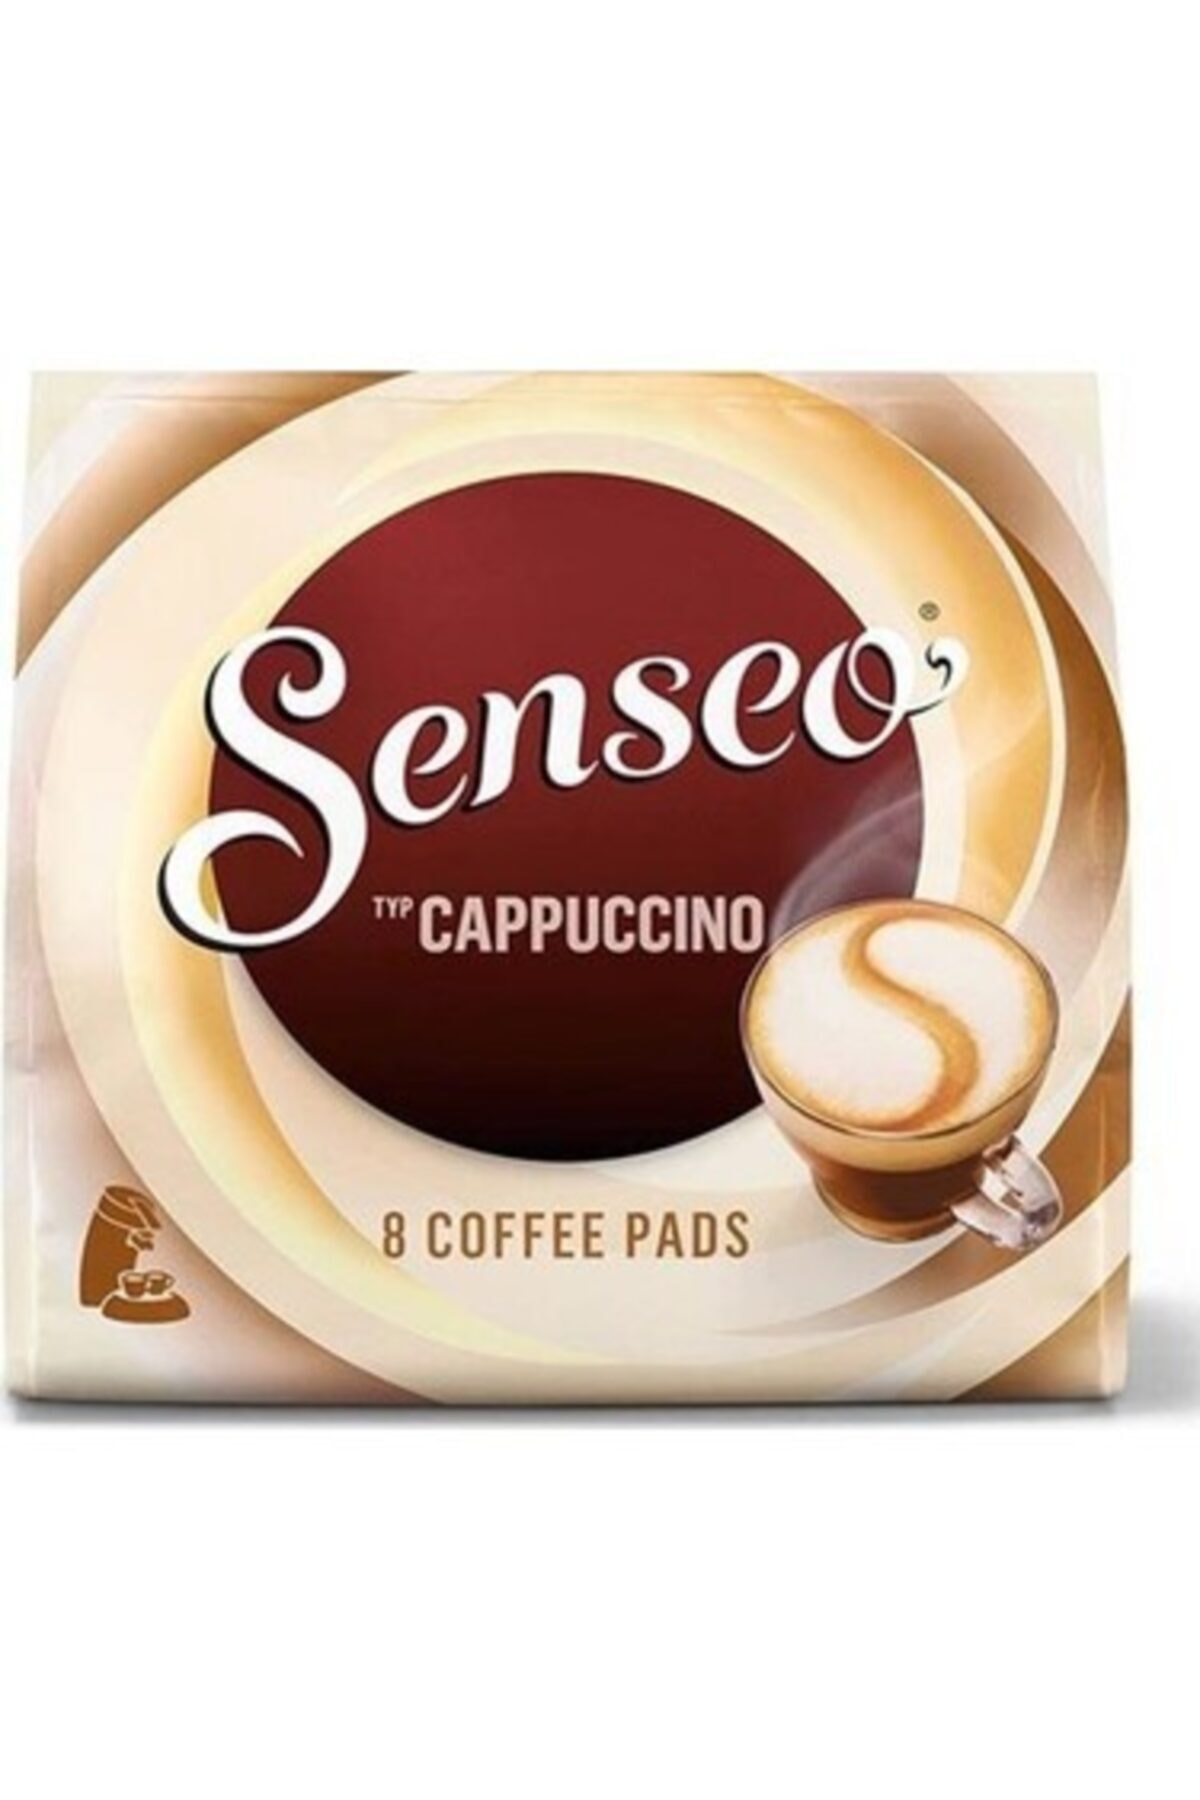 senseo kahve Senseo Typcappuccino 8 Coffee Pads